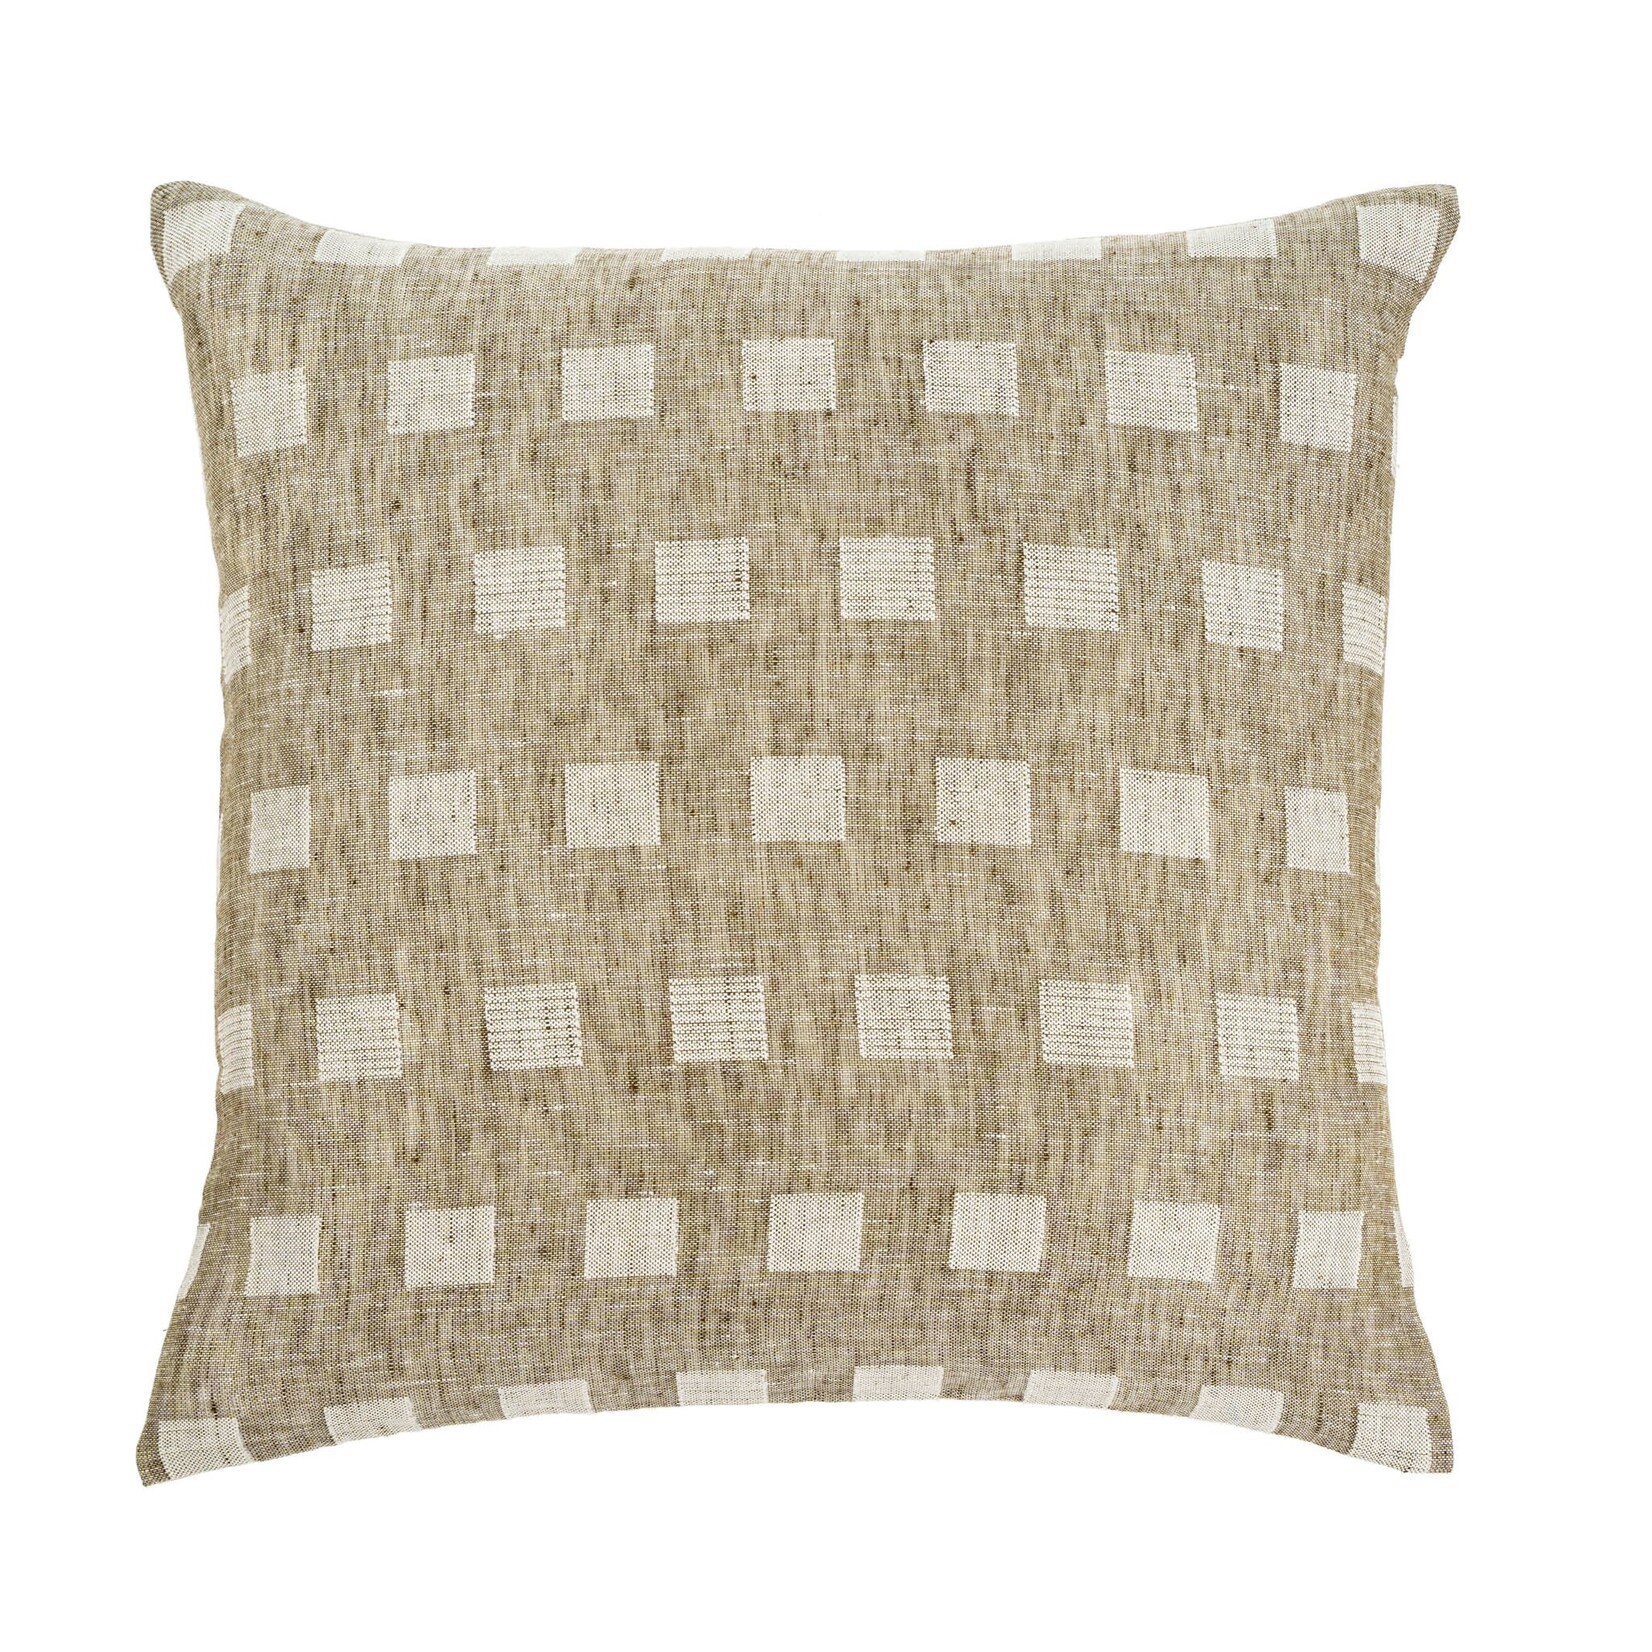 Indaba Check Linen Pillow - Natural - 20"x20"